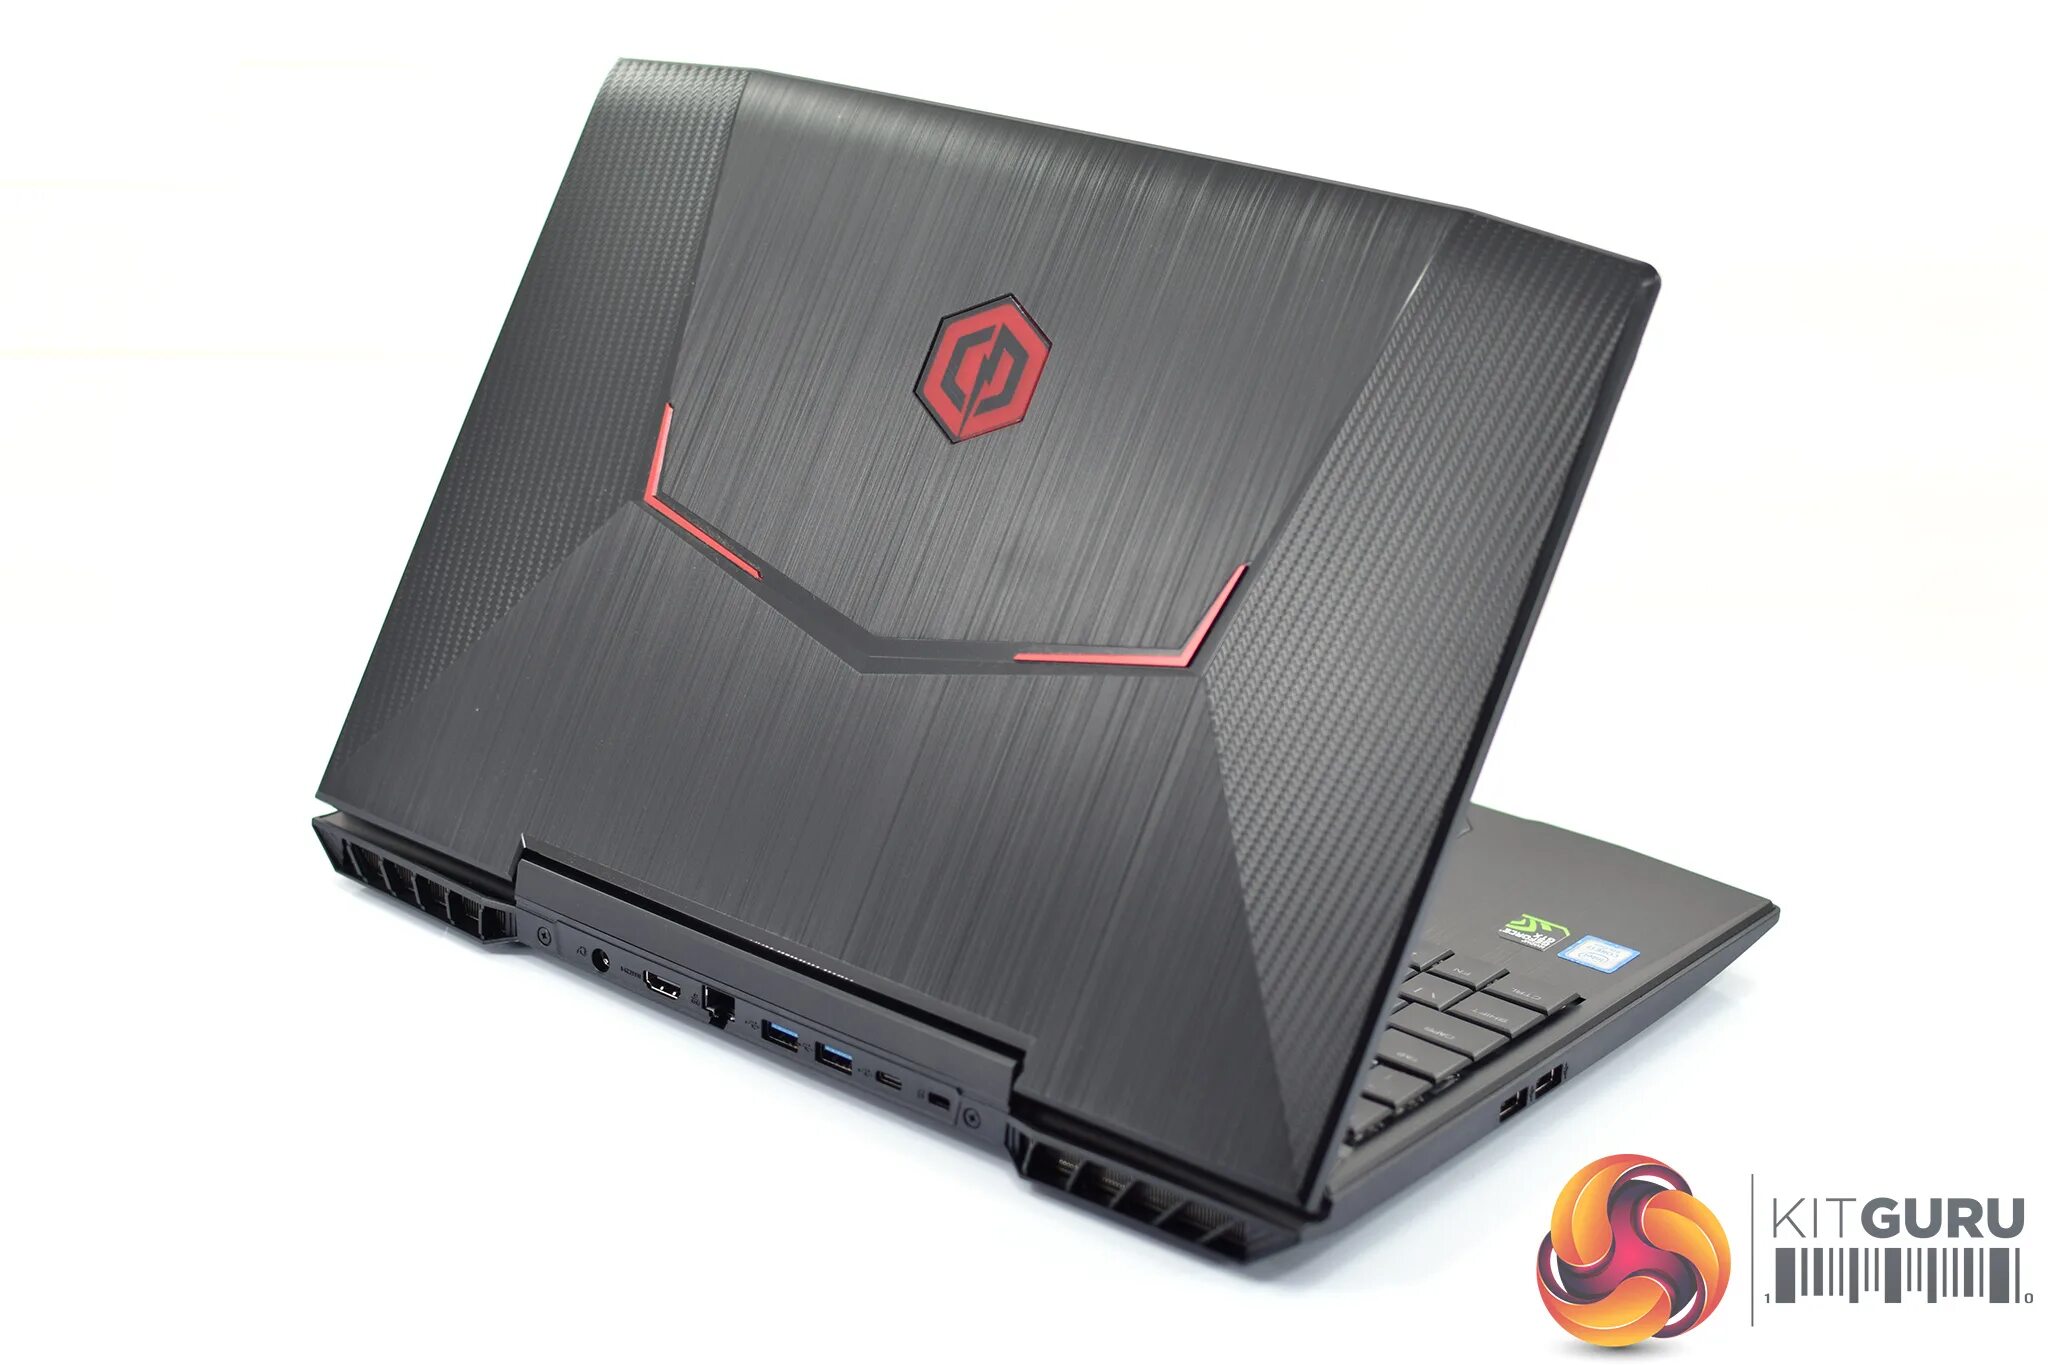 GTX 1060 Laptop. IIISI ноутбук. CYBERPOWER ноутбук. Ps3 ноутбук